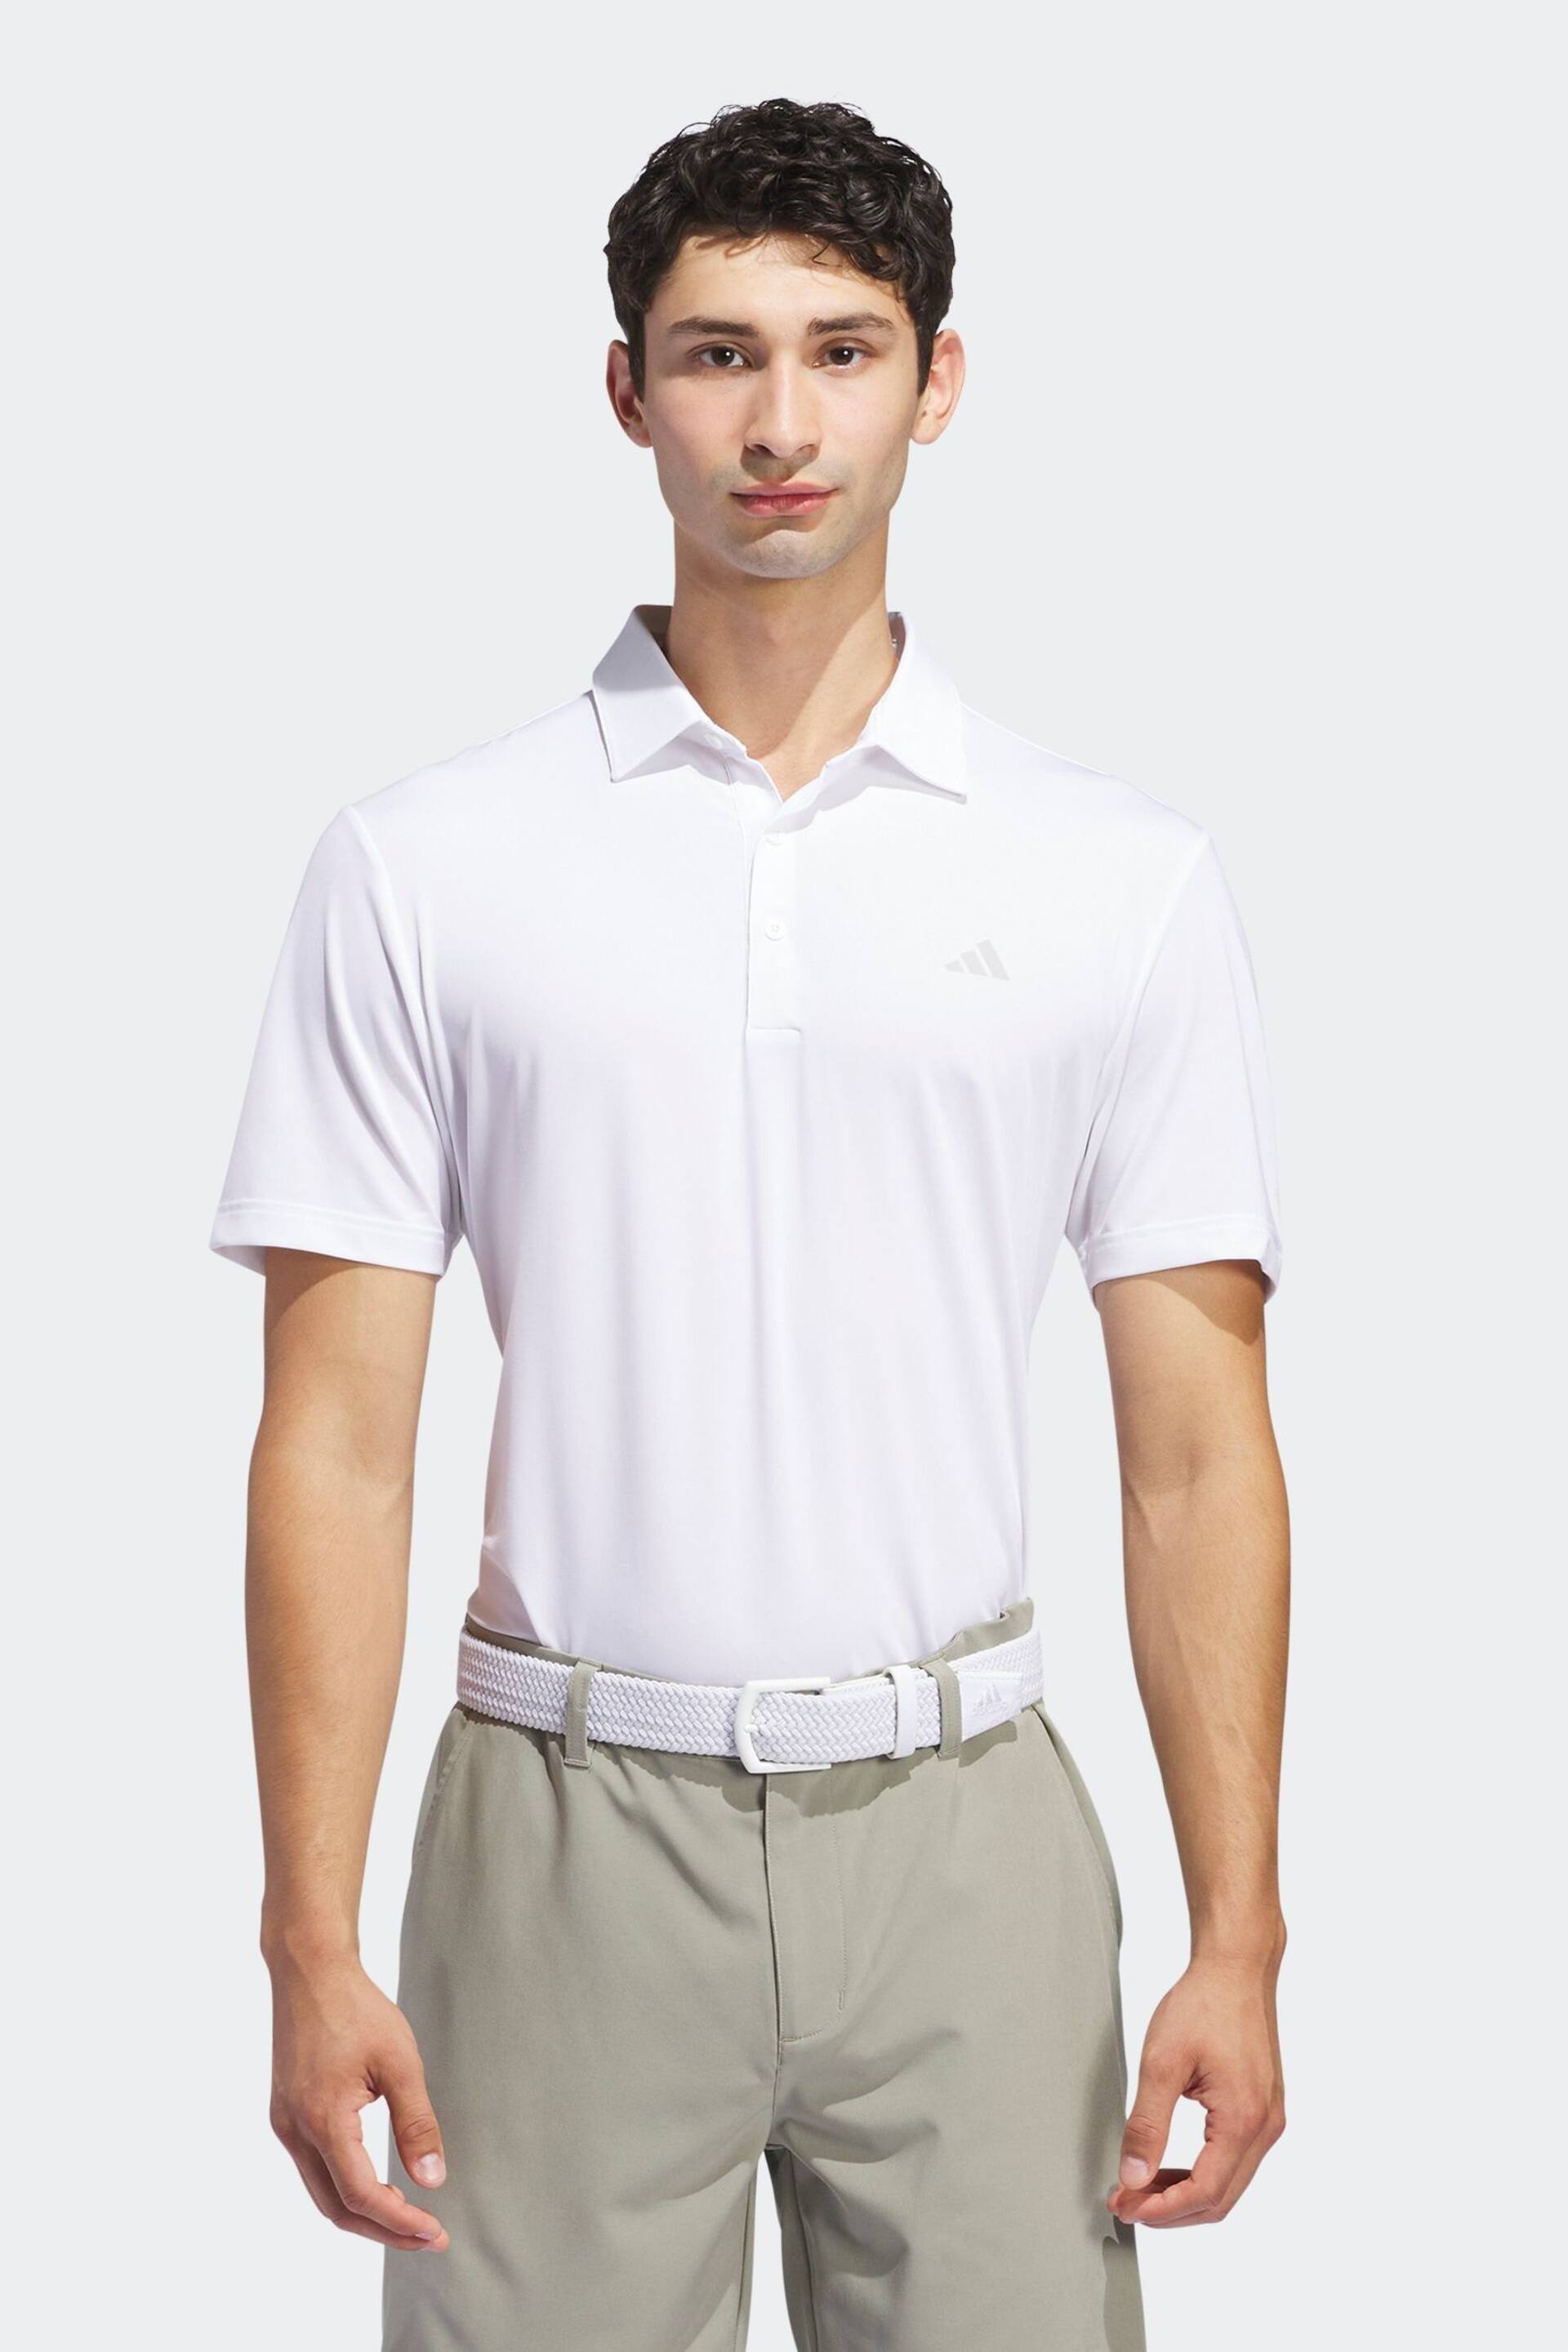 adidas Golf Ultimate365 Solid Polo Shirt - Image 1 of 8